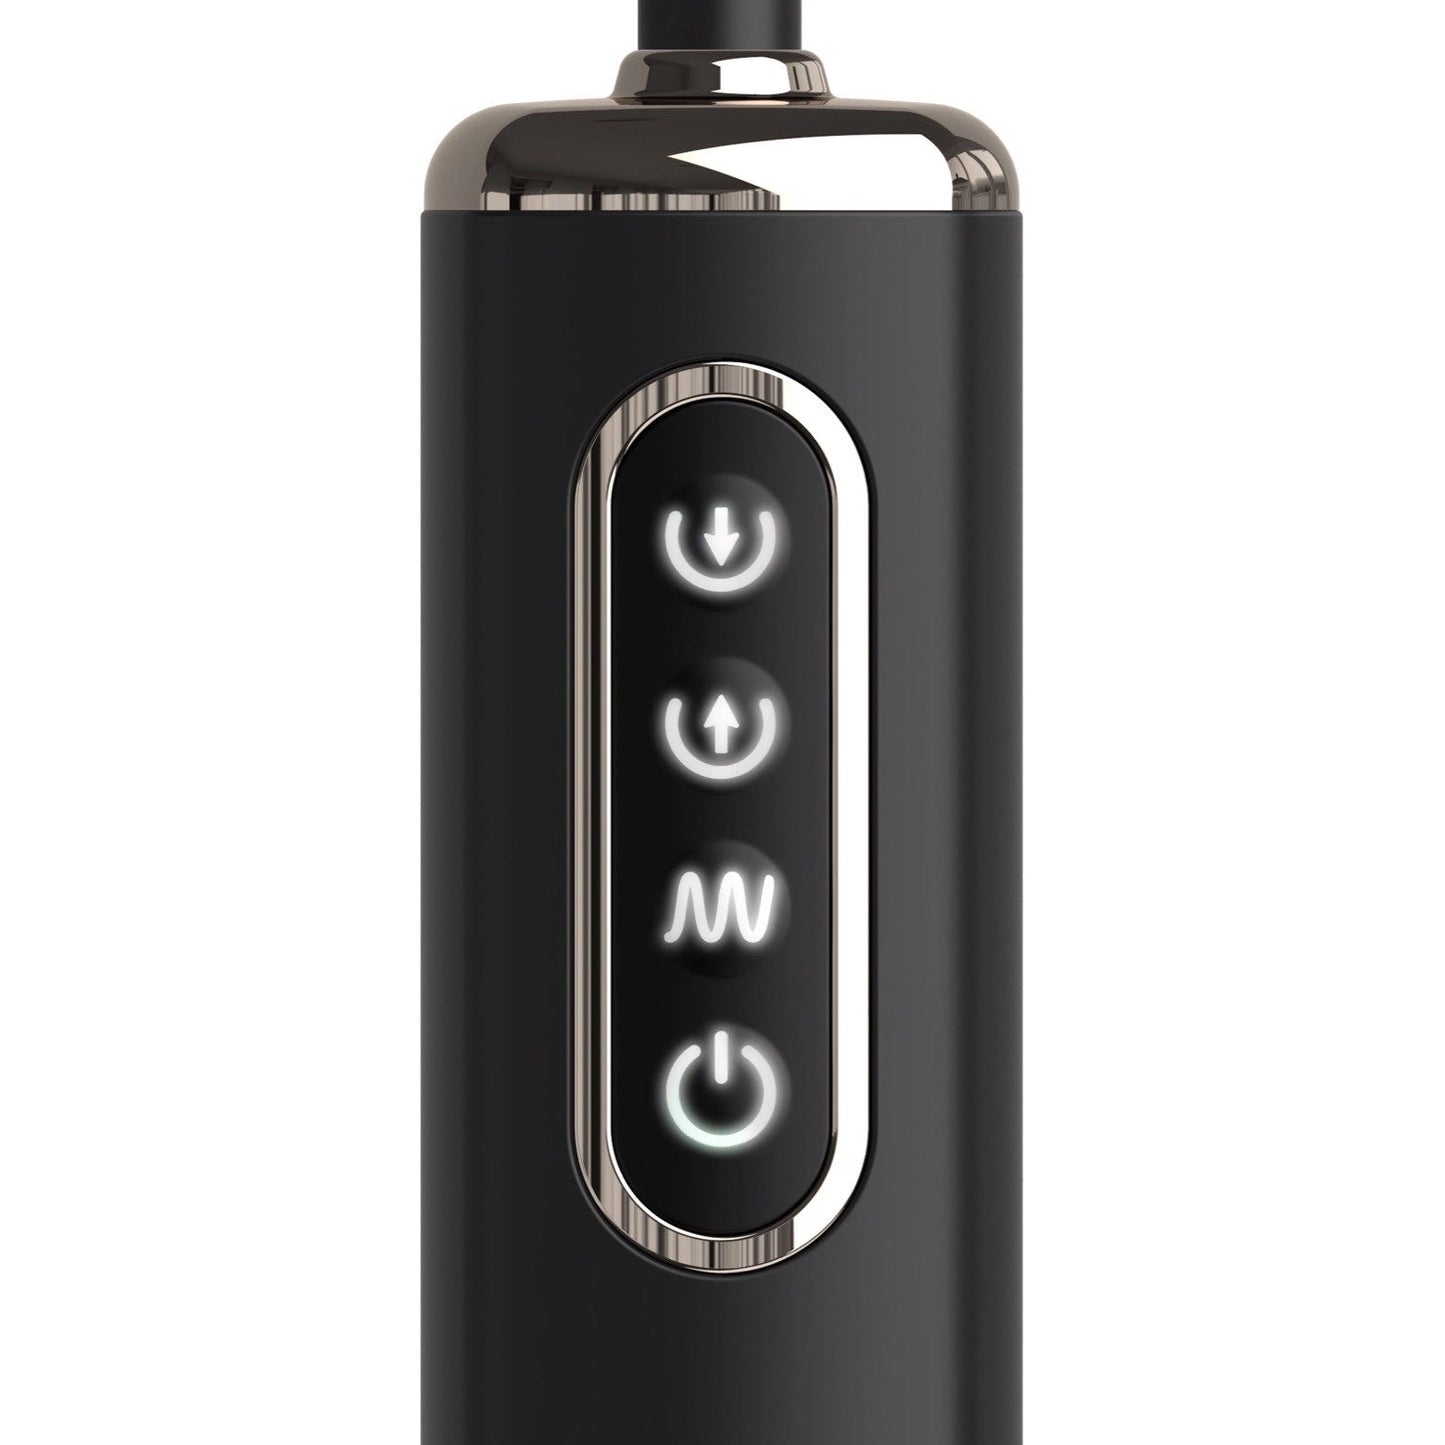 Auto Throb Inflatable Vibrating Plug - Black 13 cm USB Rechargeable Inflatating Butt Plug